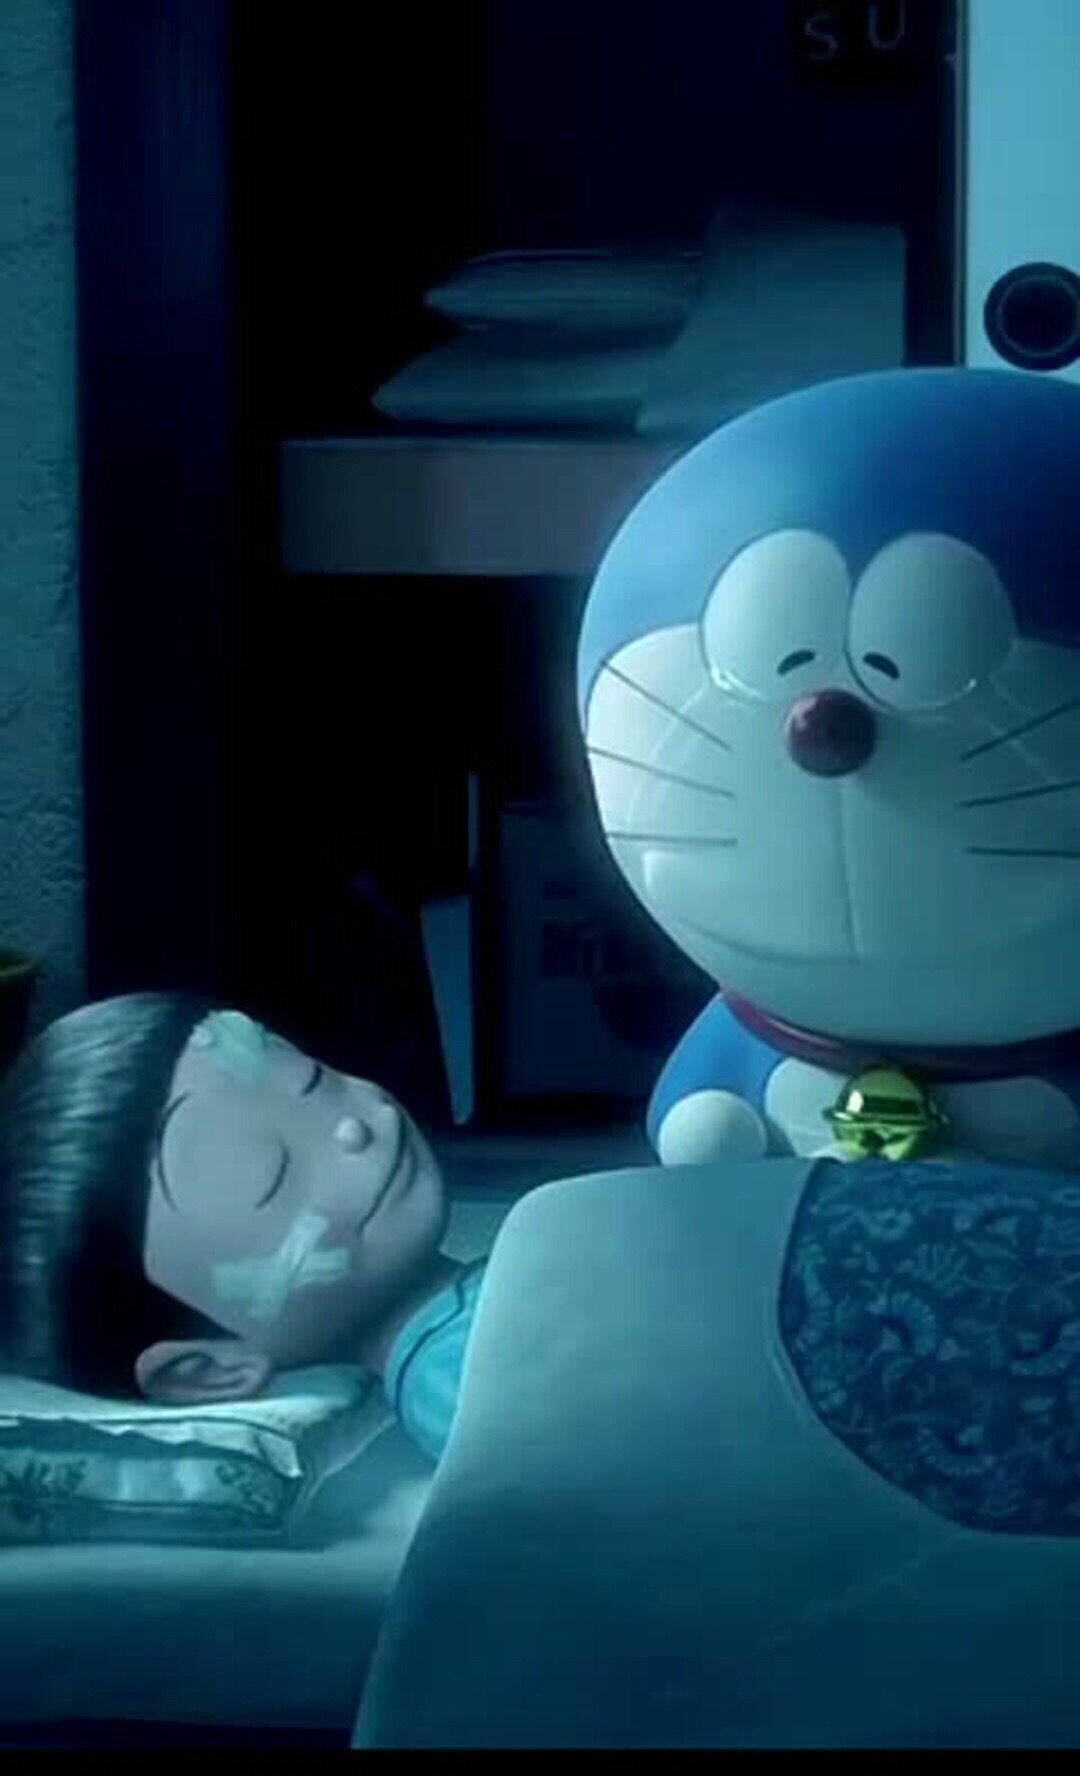 Doraemon Watching Over Cute Nobita